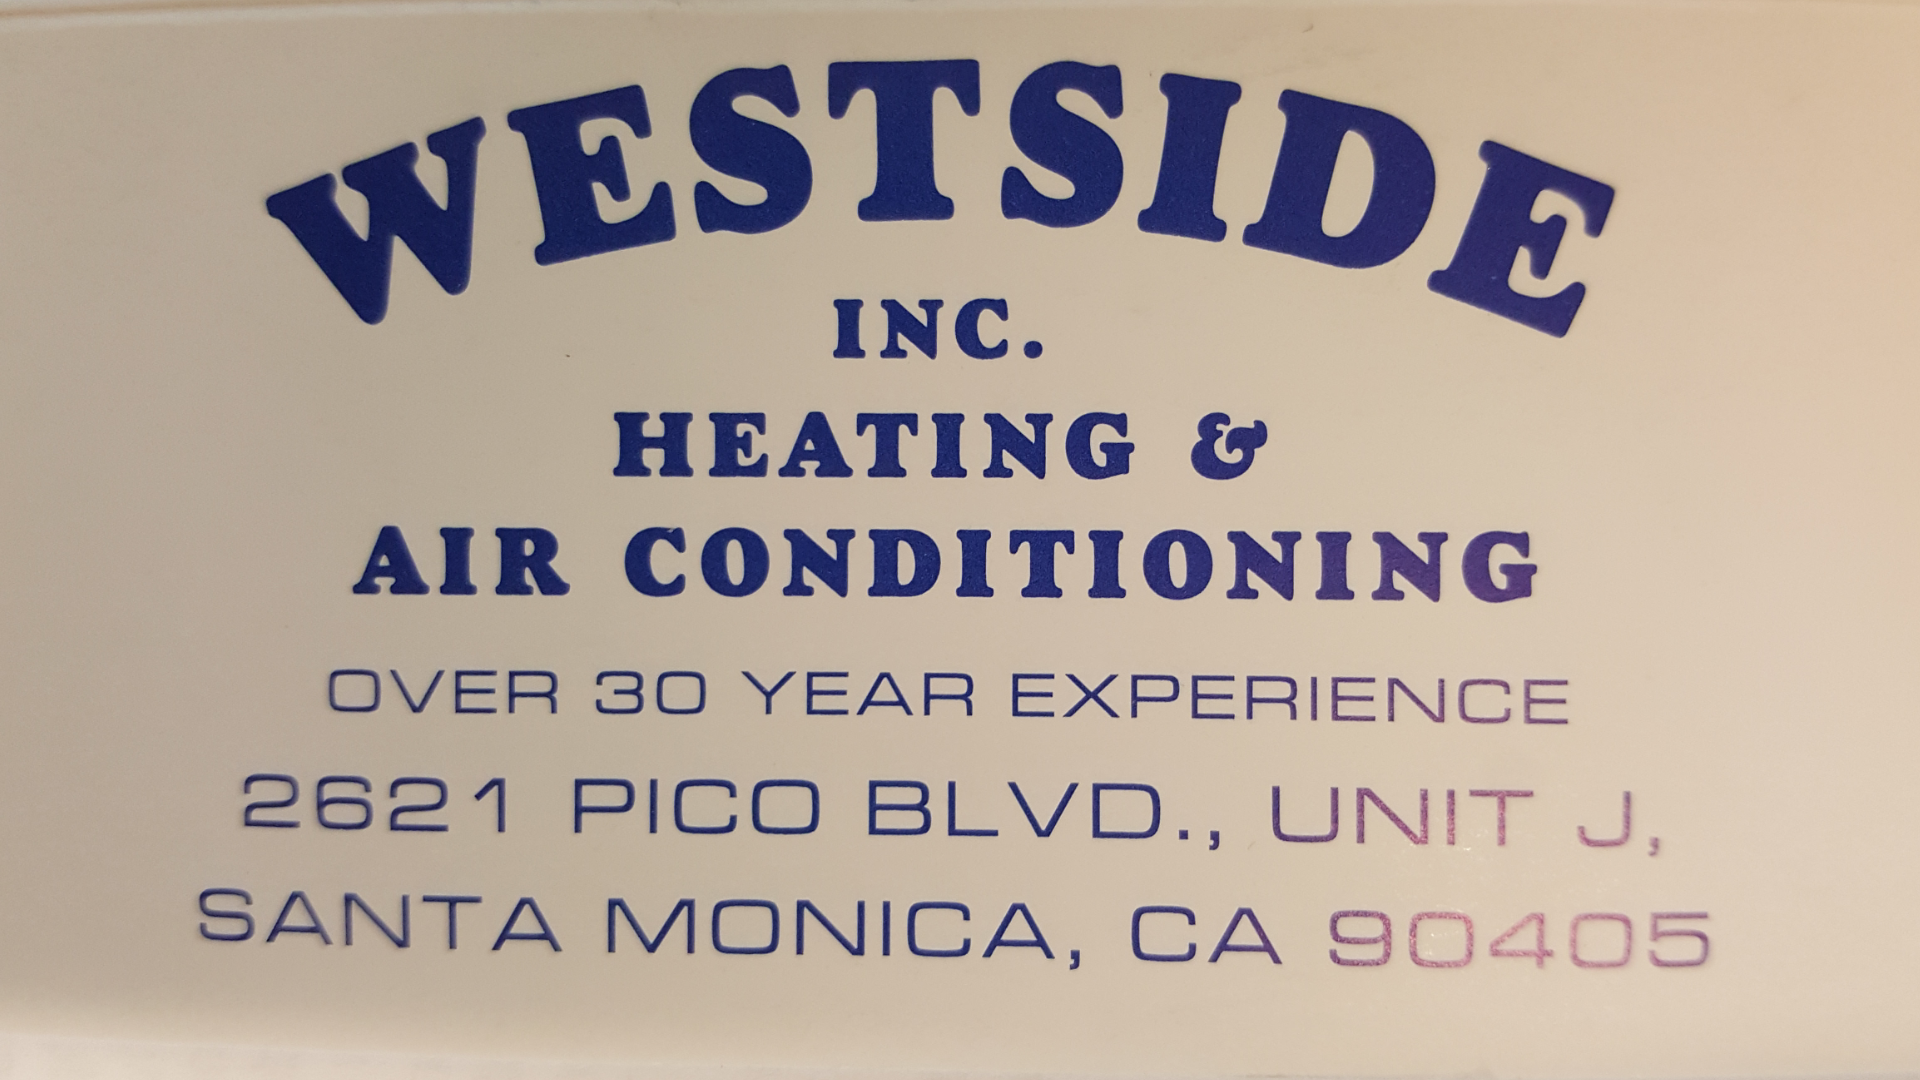 Westside Heating & Air Conditioning, Inc. logo